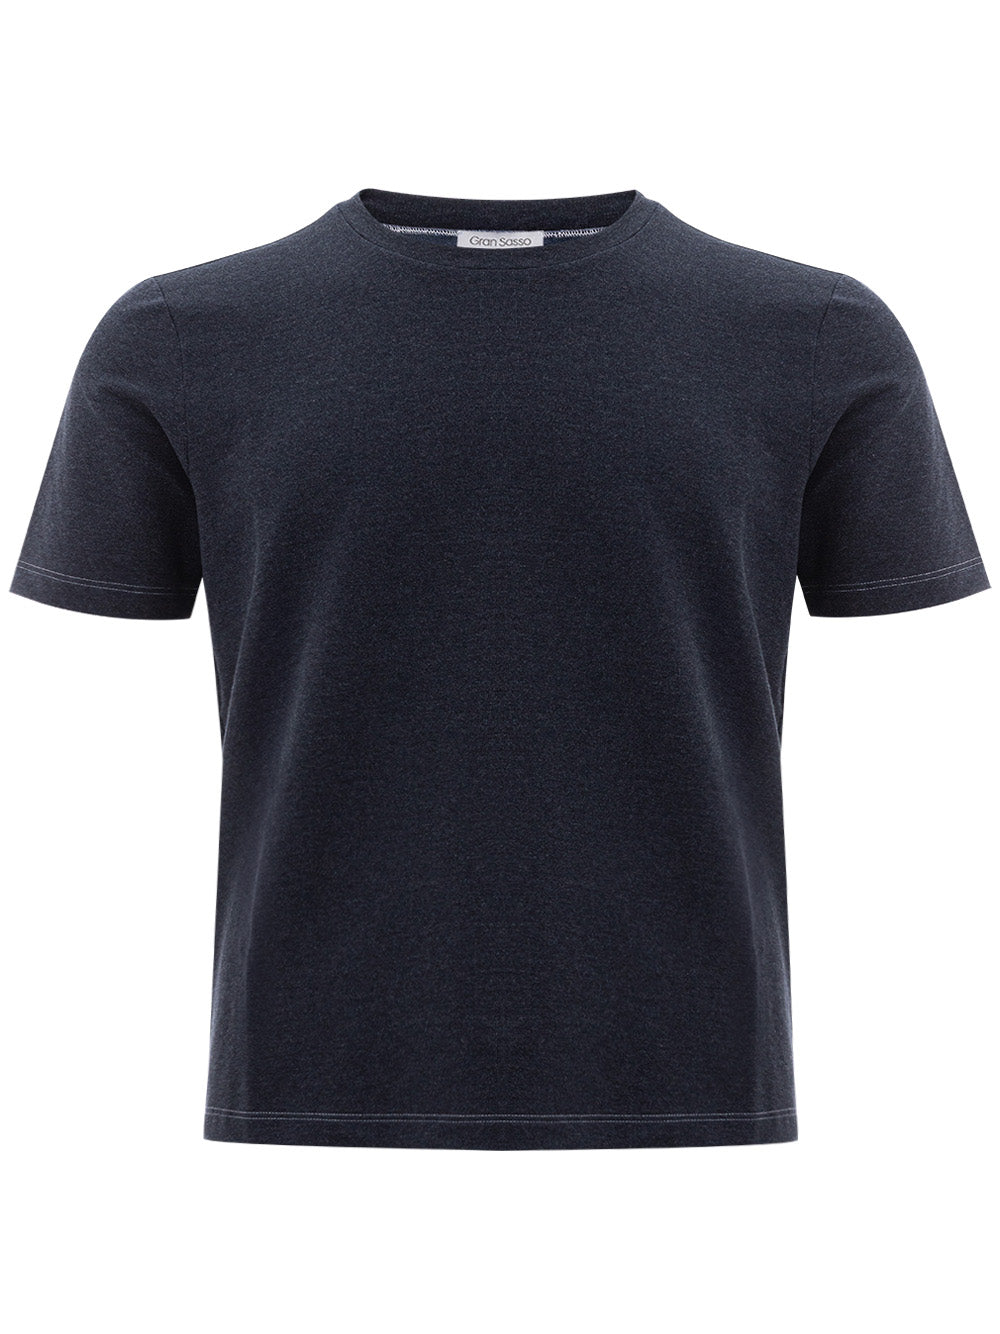 Gran Sasso Blue Cotton T-Shirt